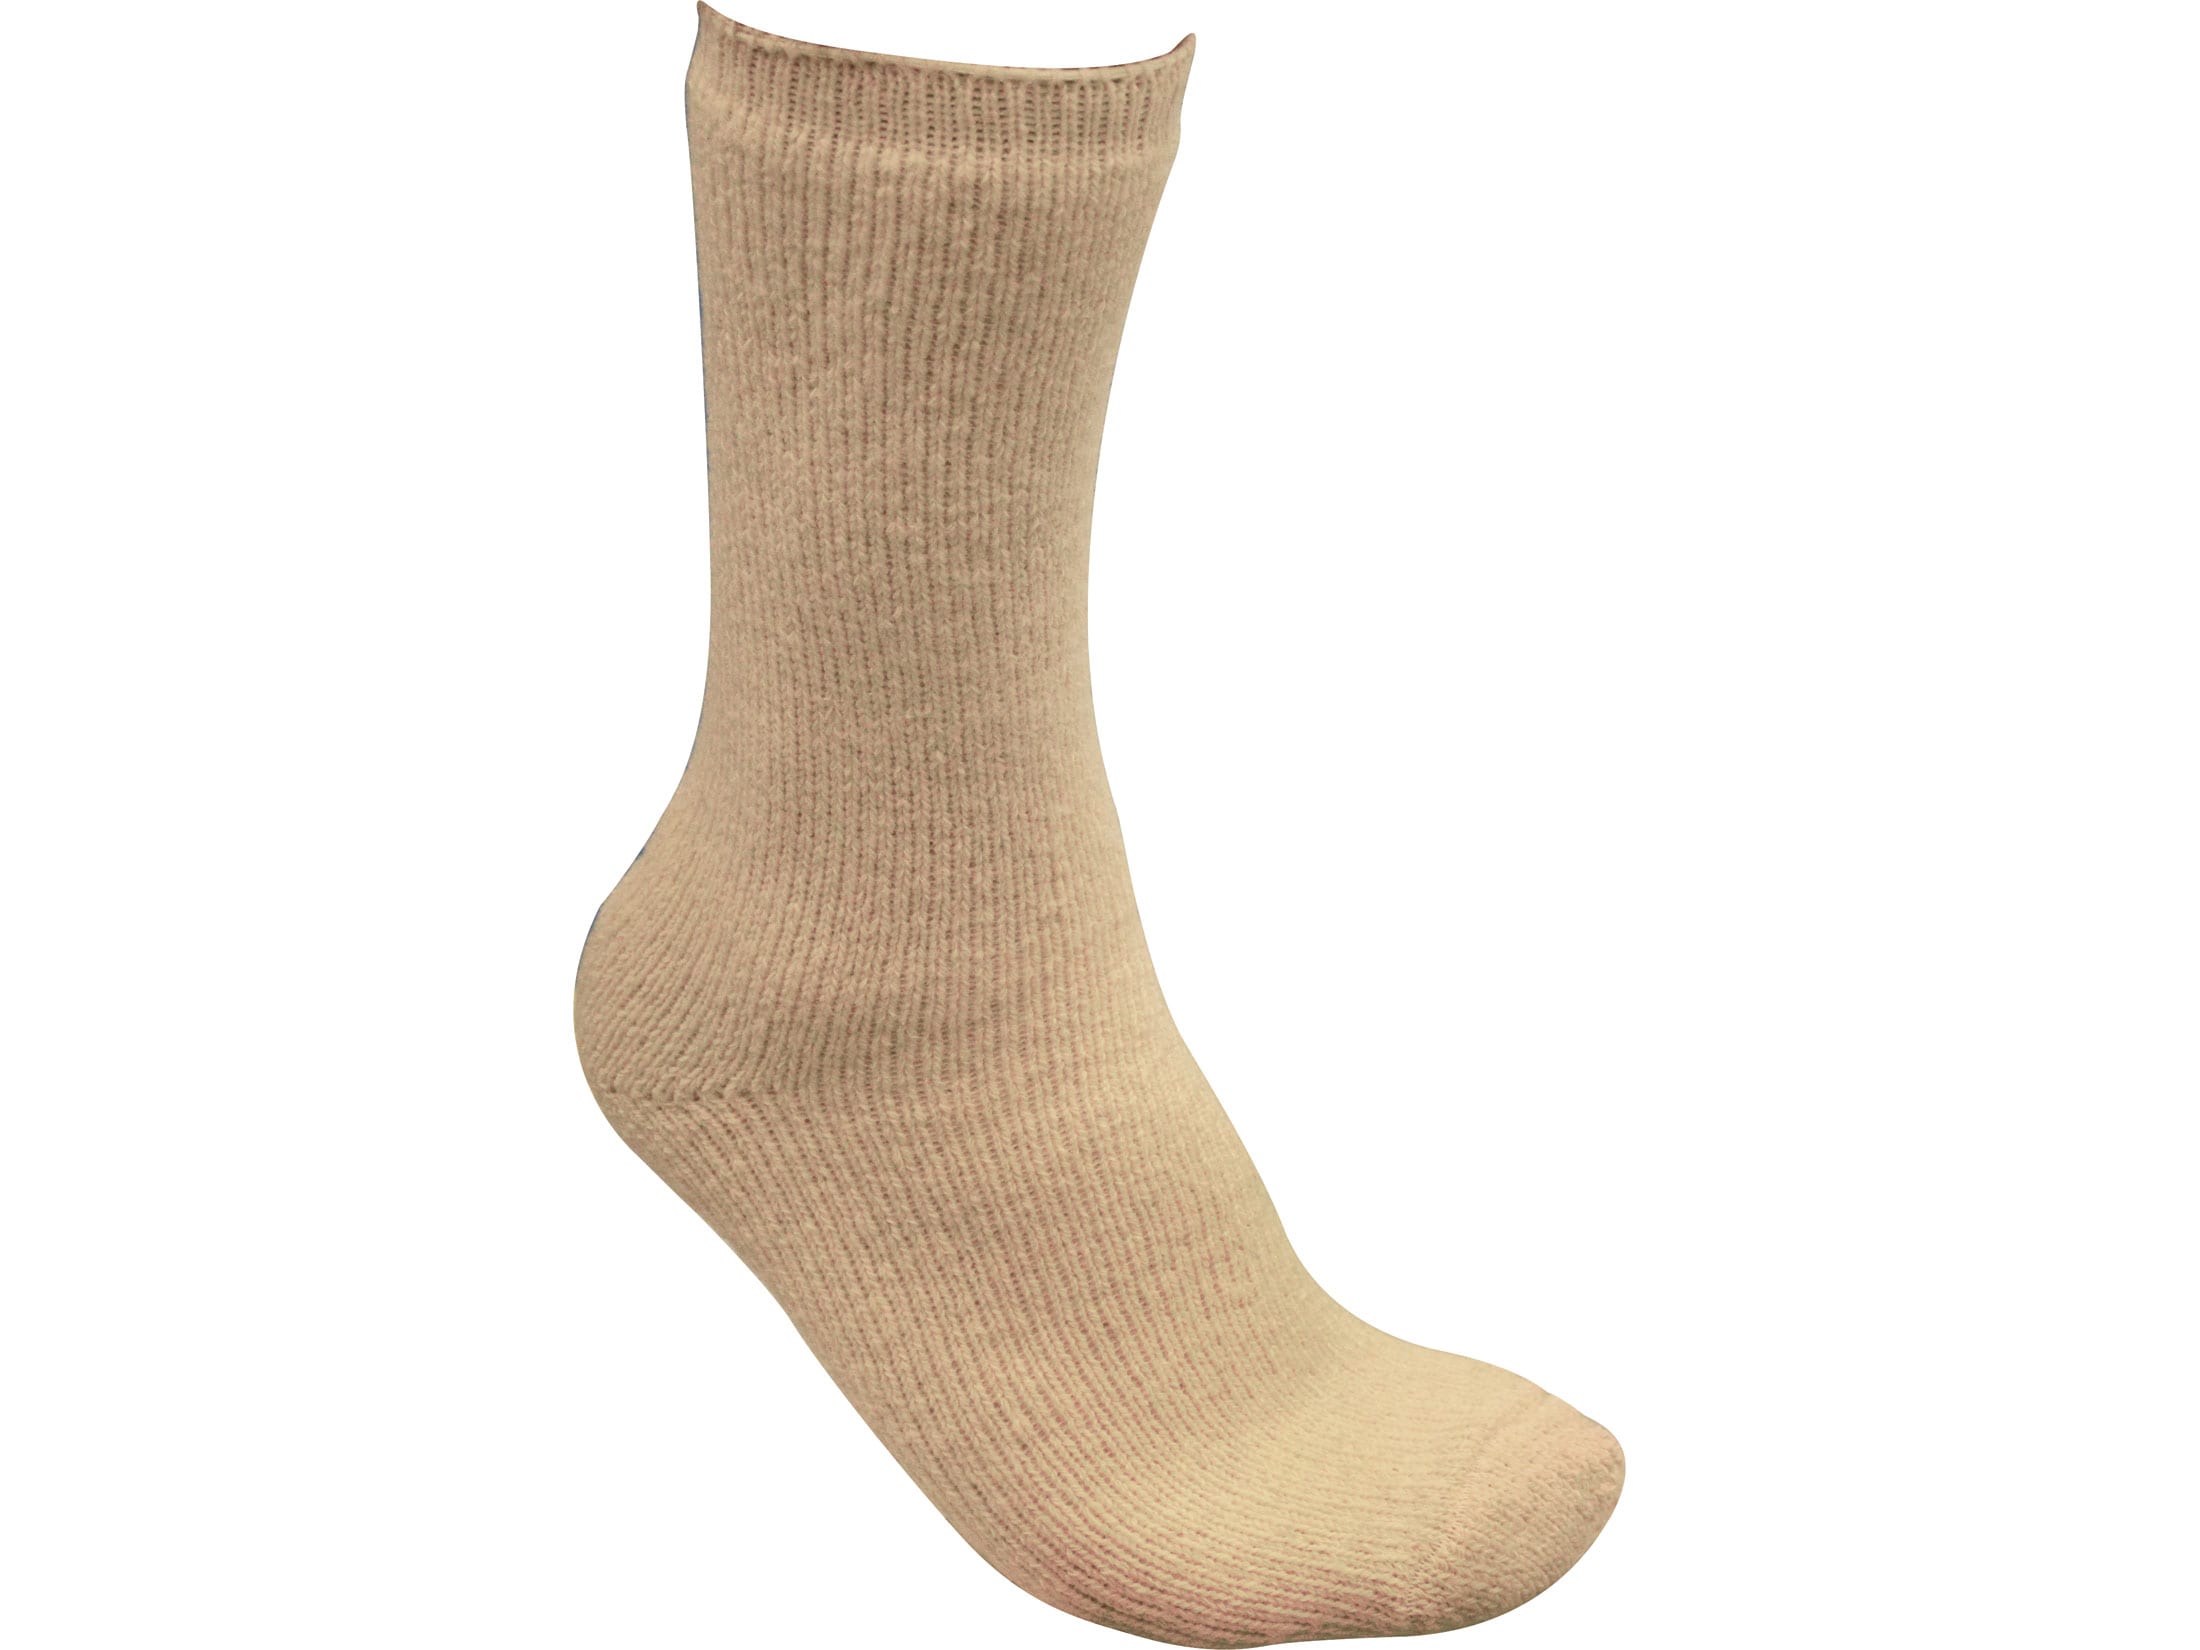 Military Surplus Boot Socks Grade 1 Wool Blend Ivory Size 13 2 Pair